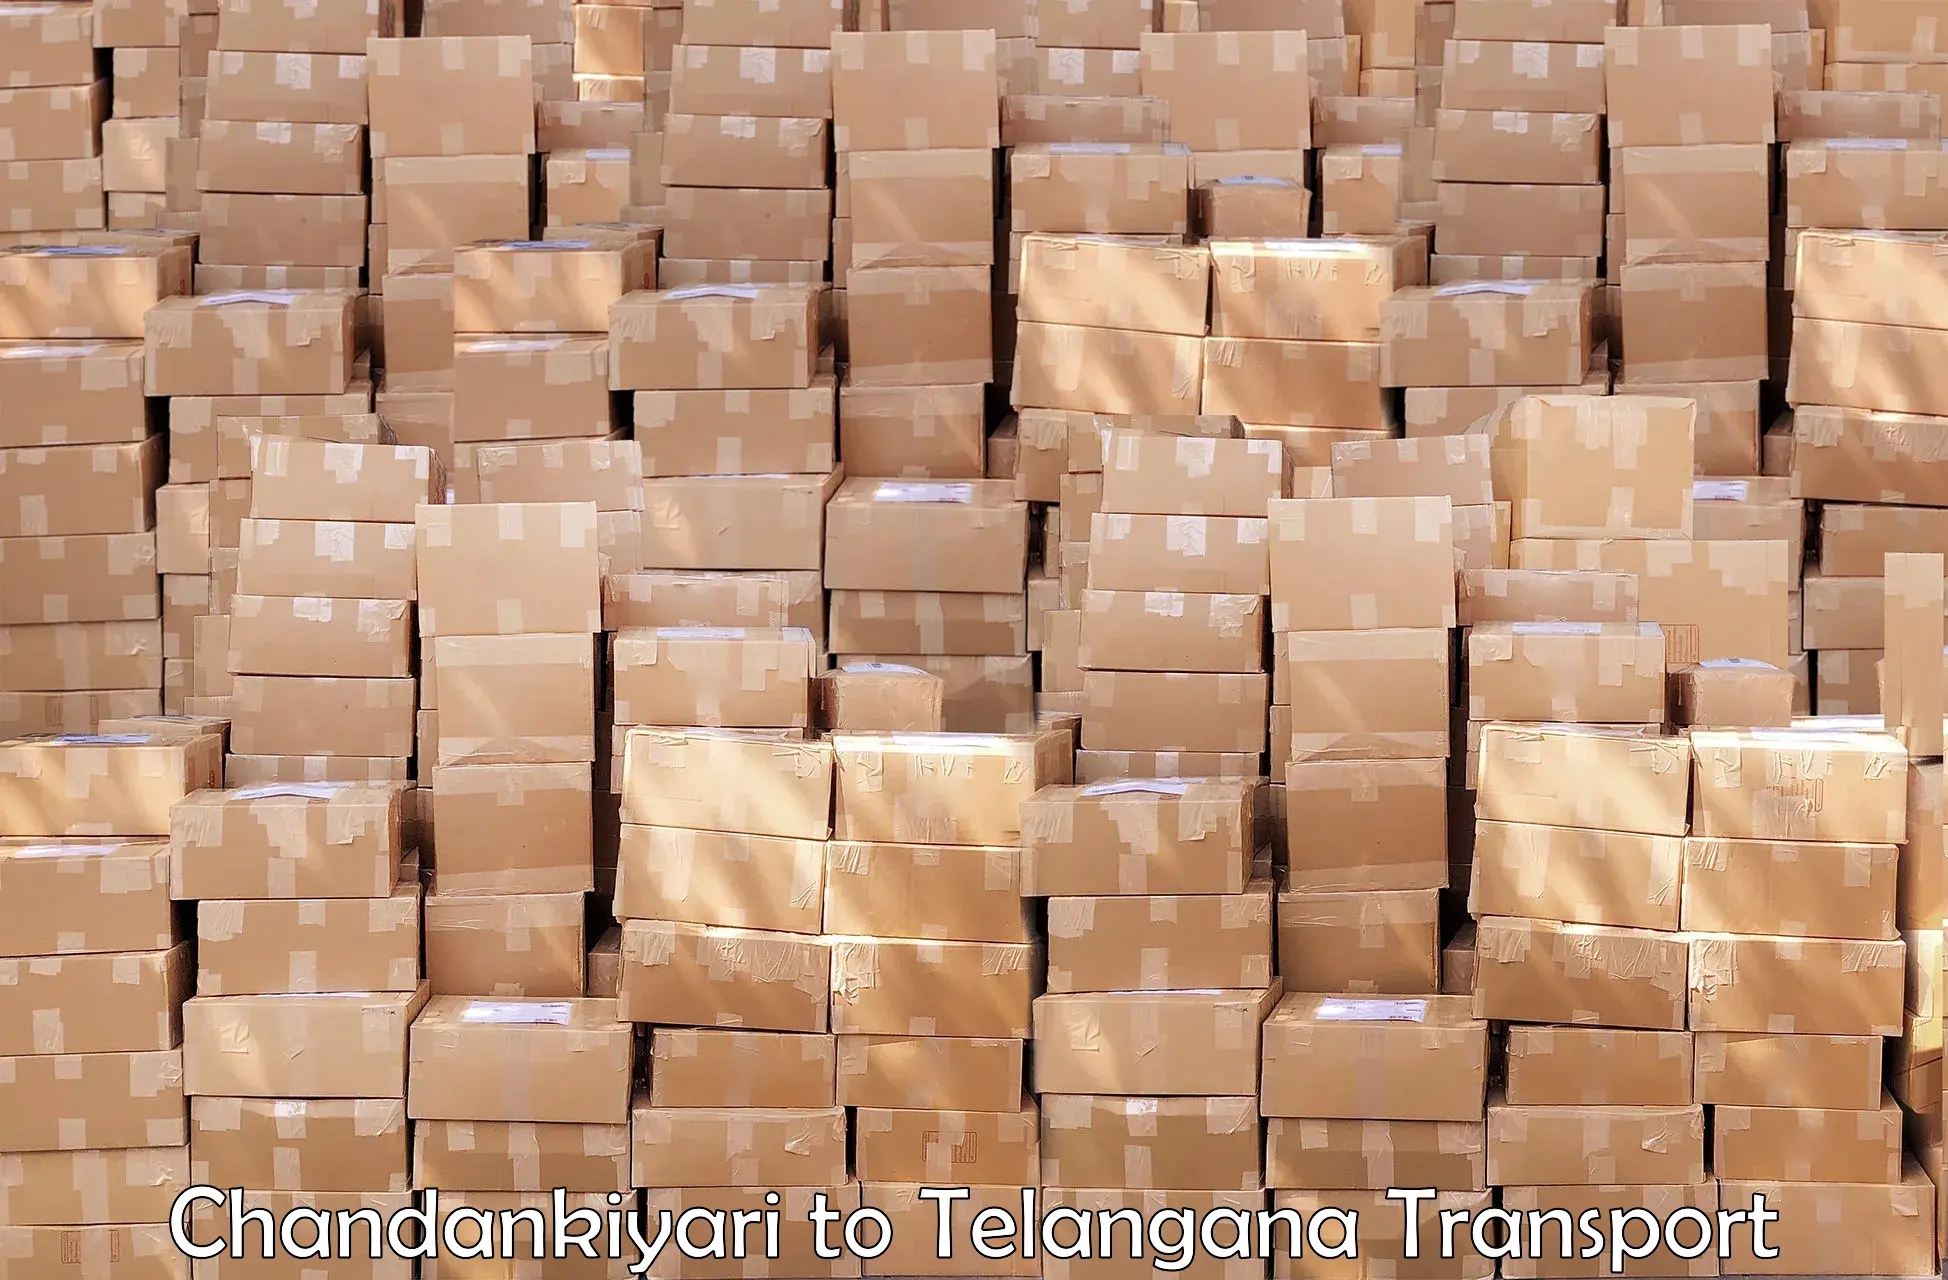 Truck transport companies in India Chandankiyari to Ibrahimpatnam